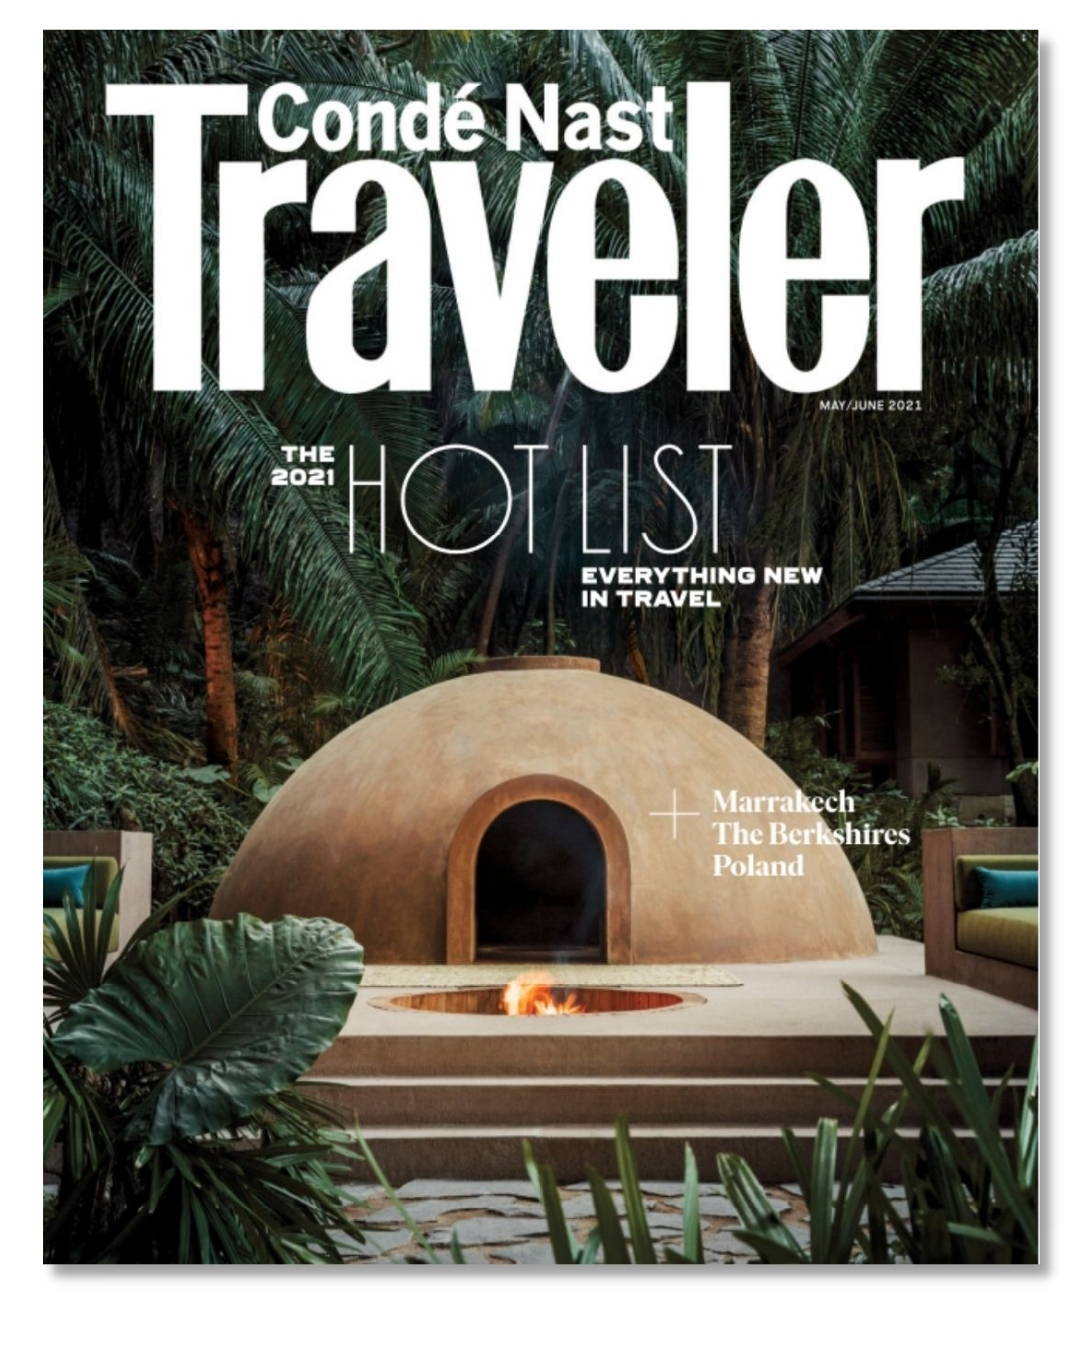 Conde Nast Traveler magazine